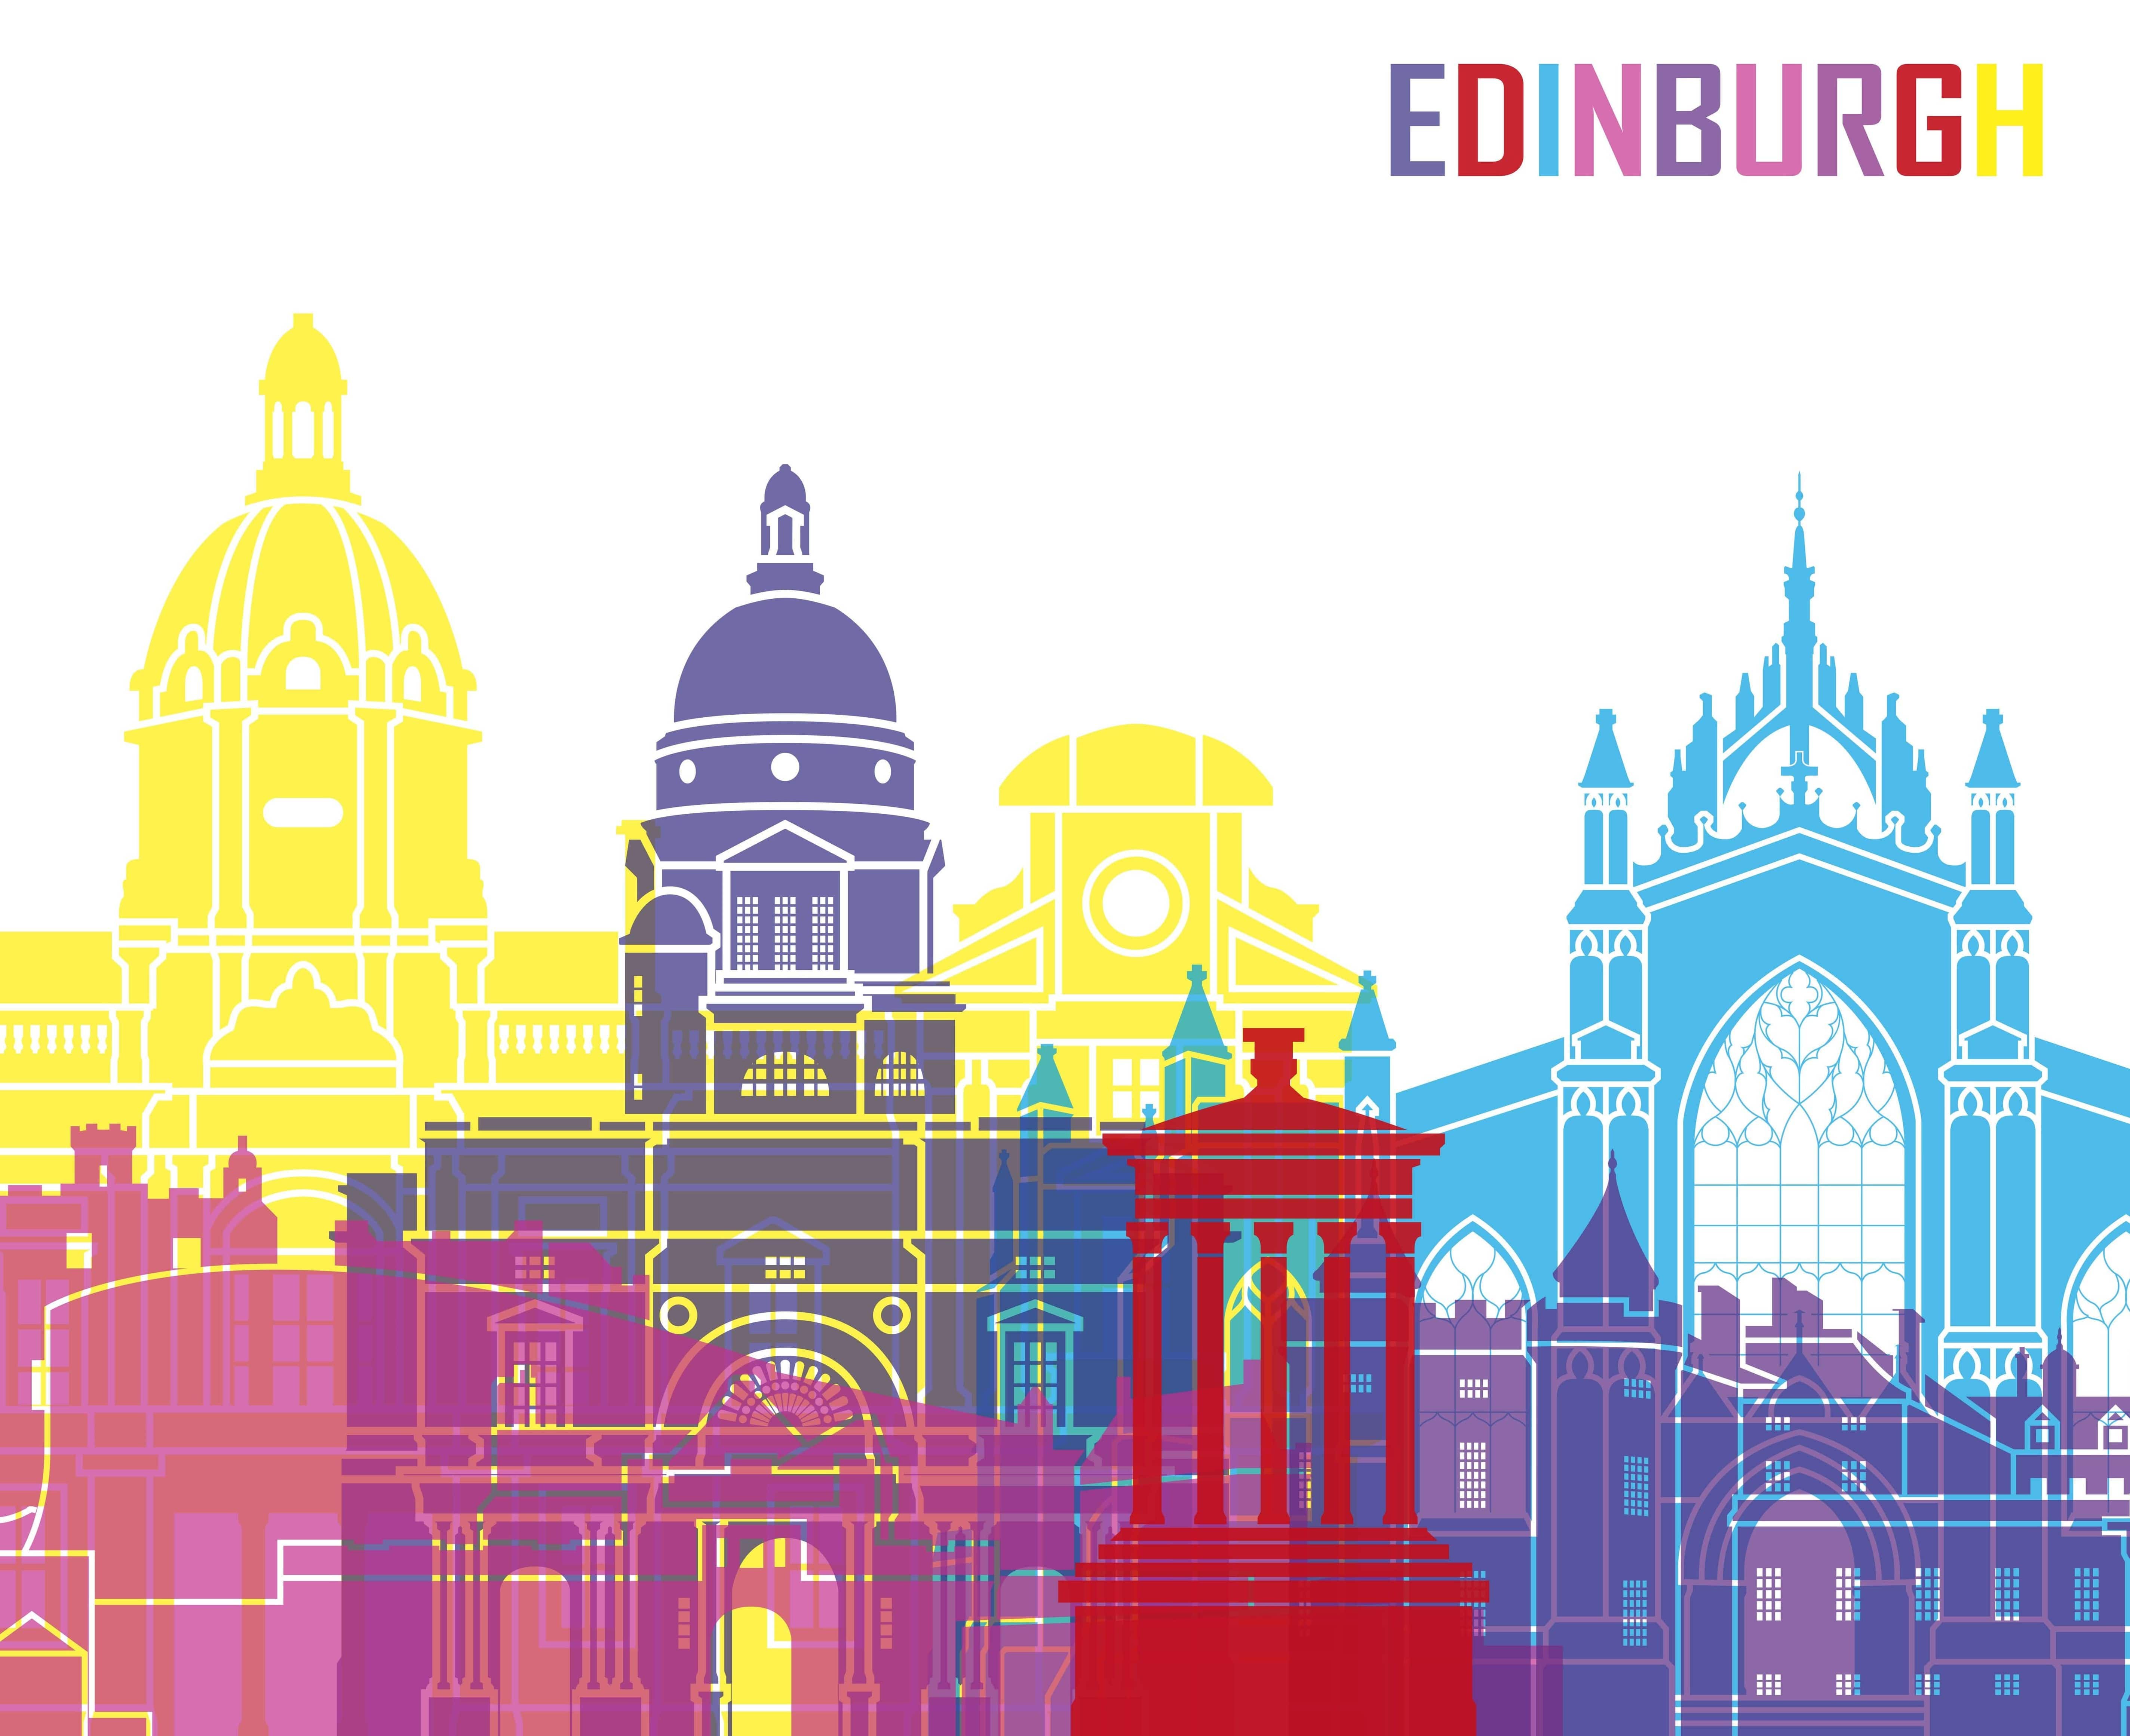 Why Edinburgh for international students